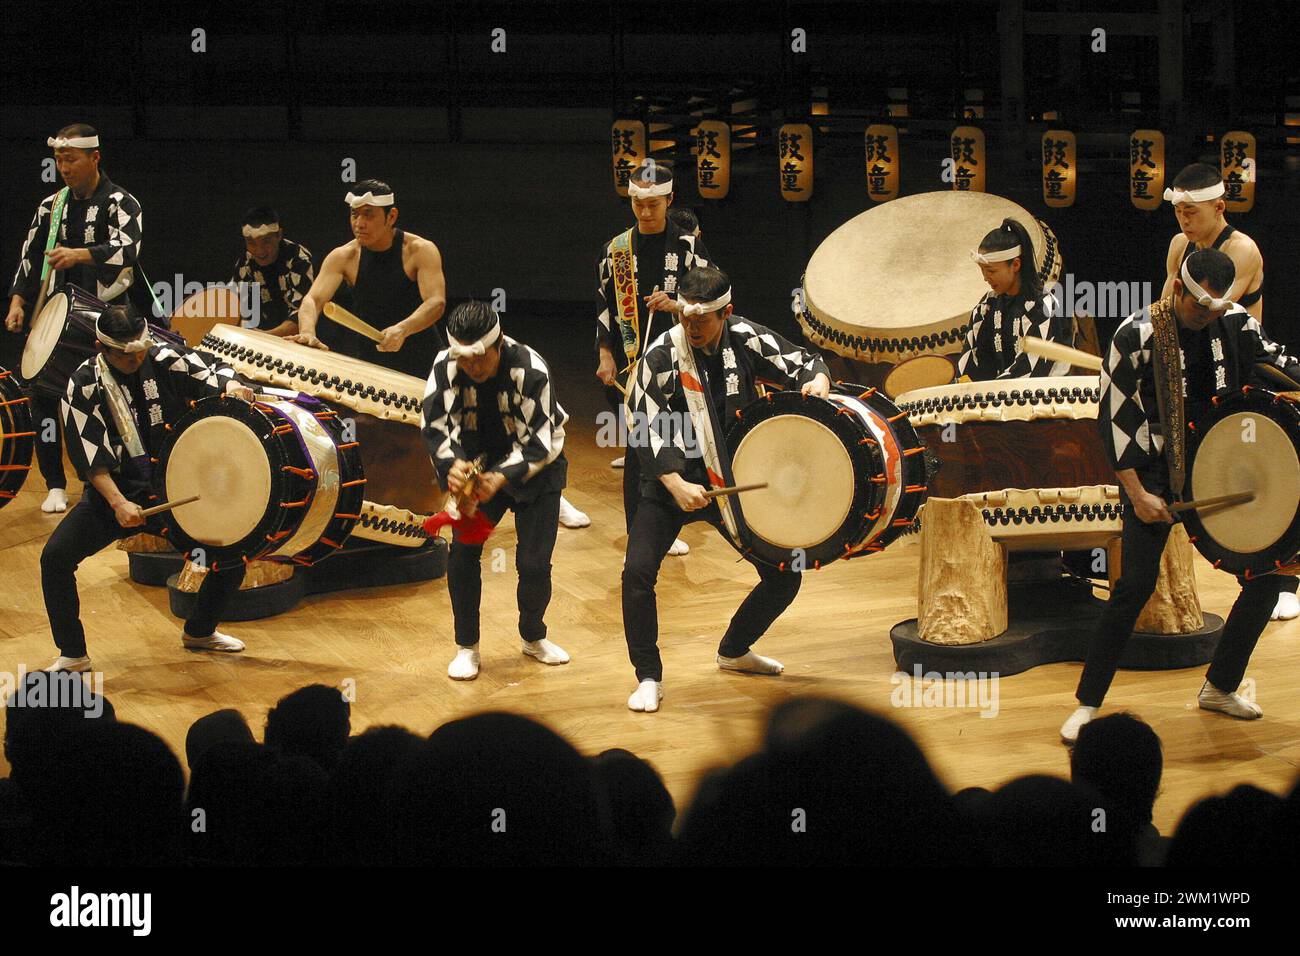 MME4734746 Milan, 2004. Kodo, Japanese Taiko Performing Arts Ensemble (Taiko is a japanese drum)/Milano, 2004. I Kodo, gruppo giapponese di percussionisti di taiko (tamburo giapponese) -; (add.info.: Milan, 2004. Kodo, Japanese Taiko Performing Arts Ensemble (Taiko is a japanese drum)/Milano, 2004. I Kodo, gruppo giapponese di percussionisti di taiko (tamburo giapponese) -); © Marcello Mencarini. All rights reserved 2024. Stock Photo